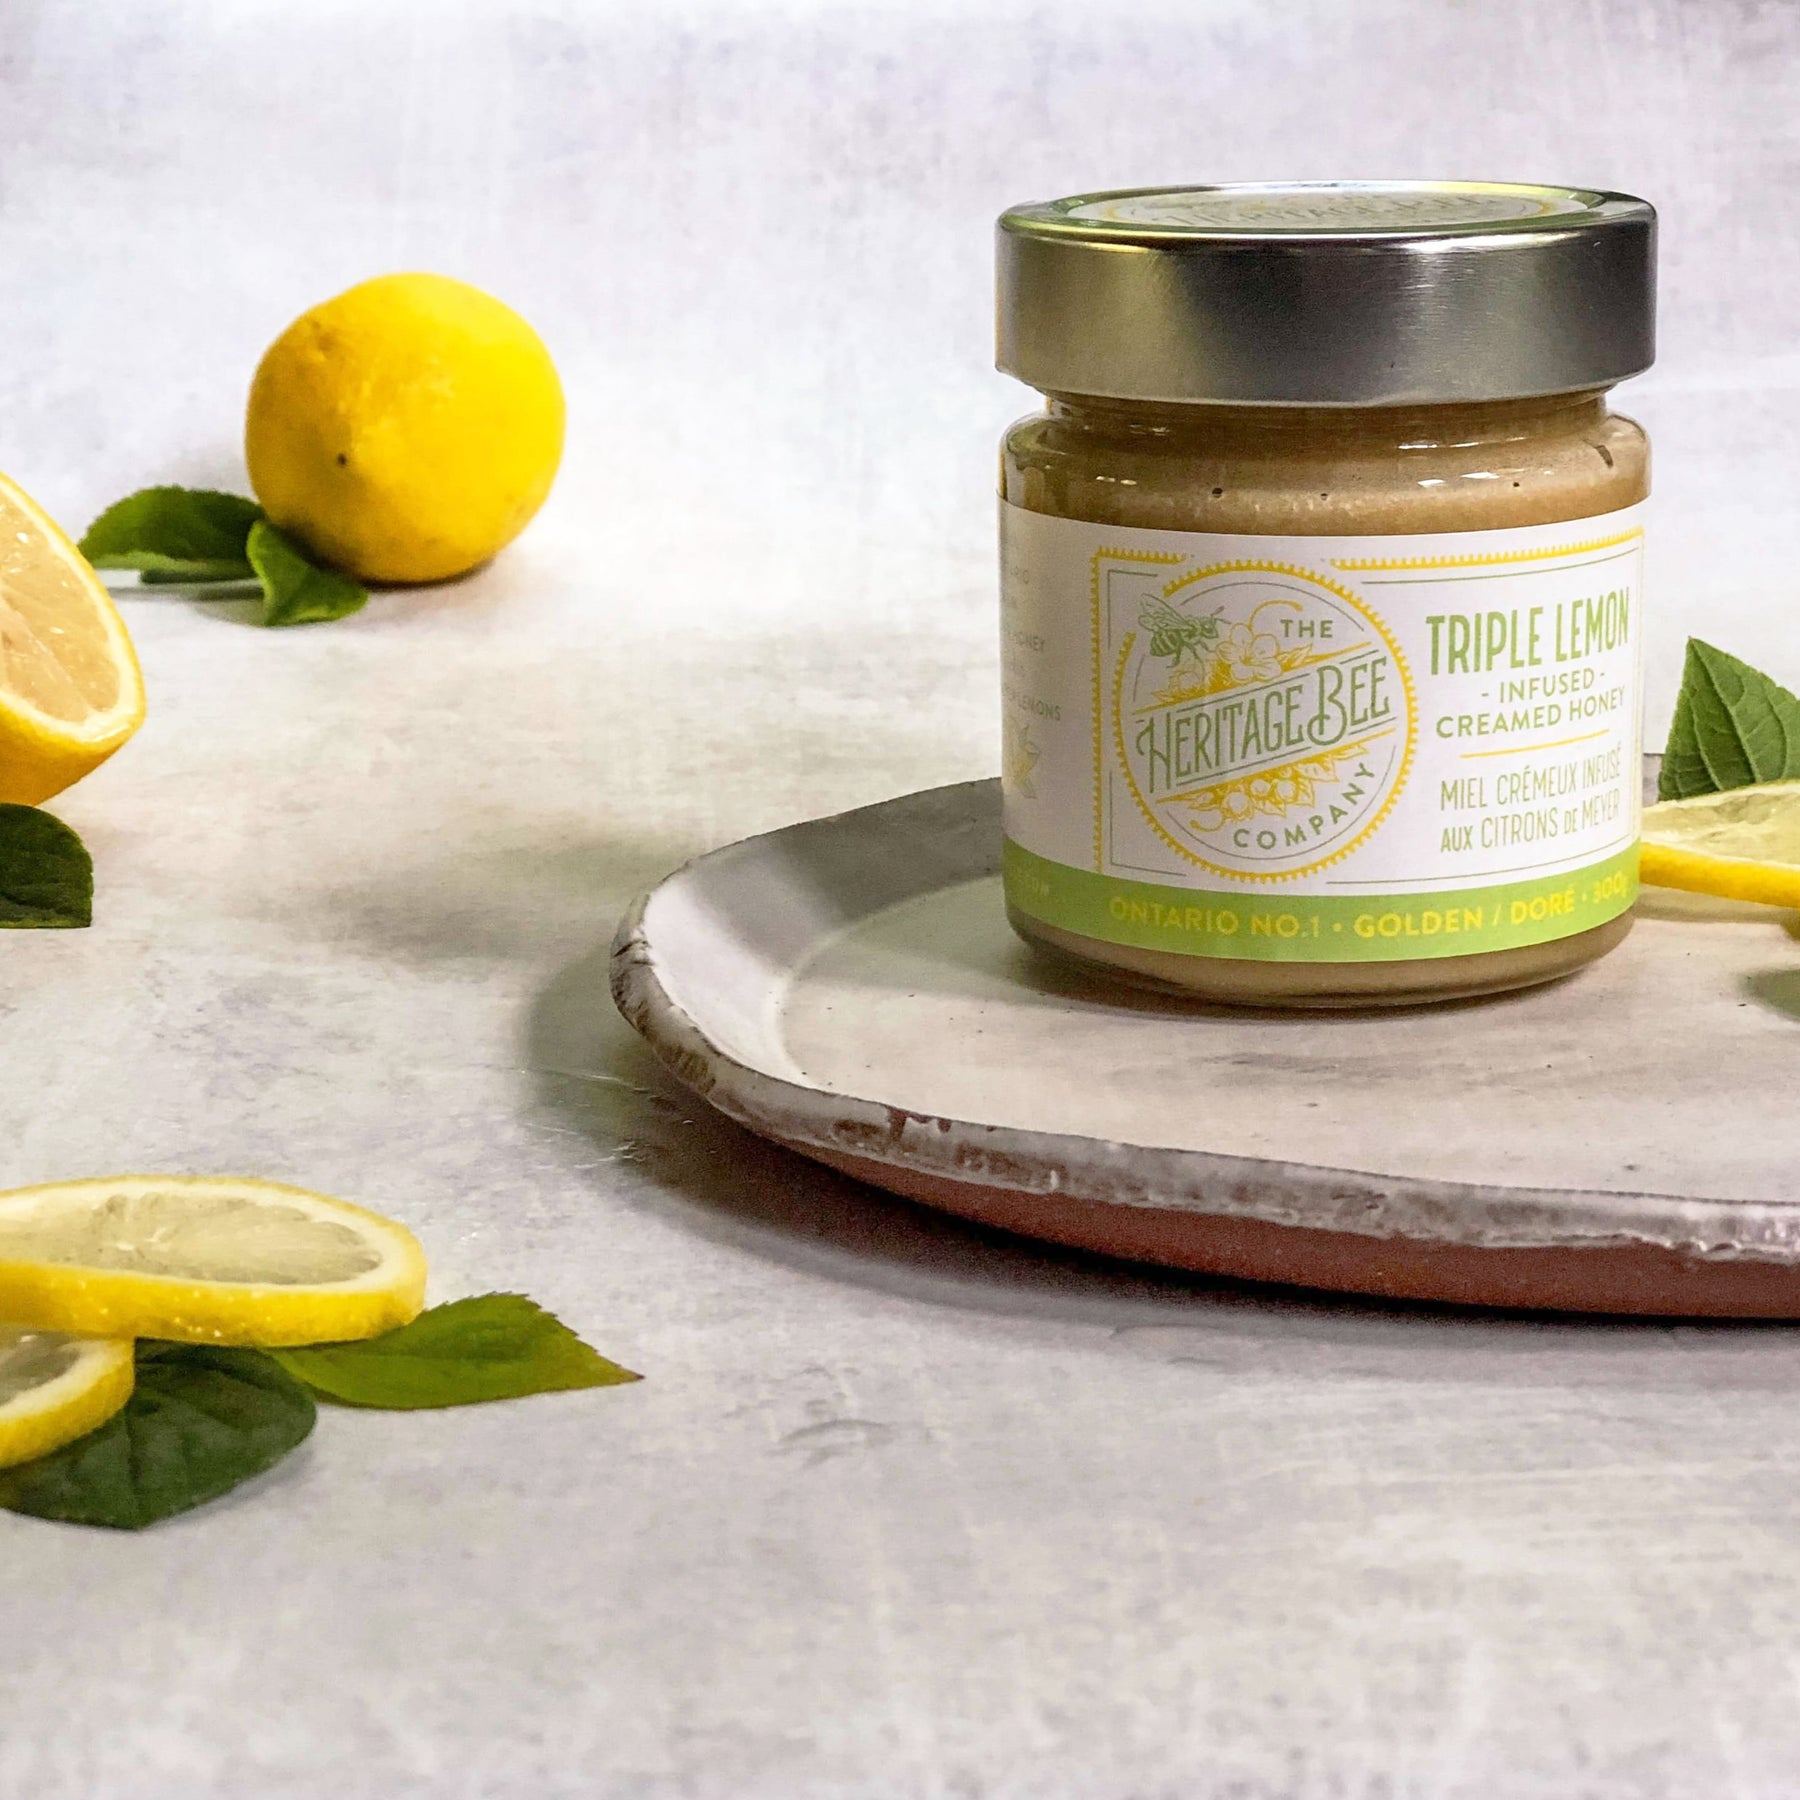 A jar of Heritage Bee Co's triple lemon infused creamed honey pictured alongside Meyer lemons. 